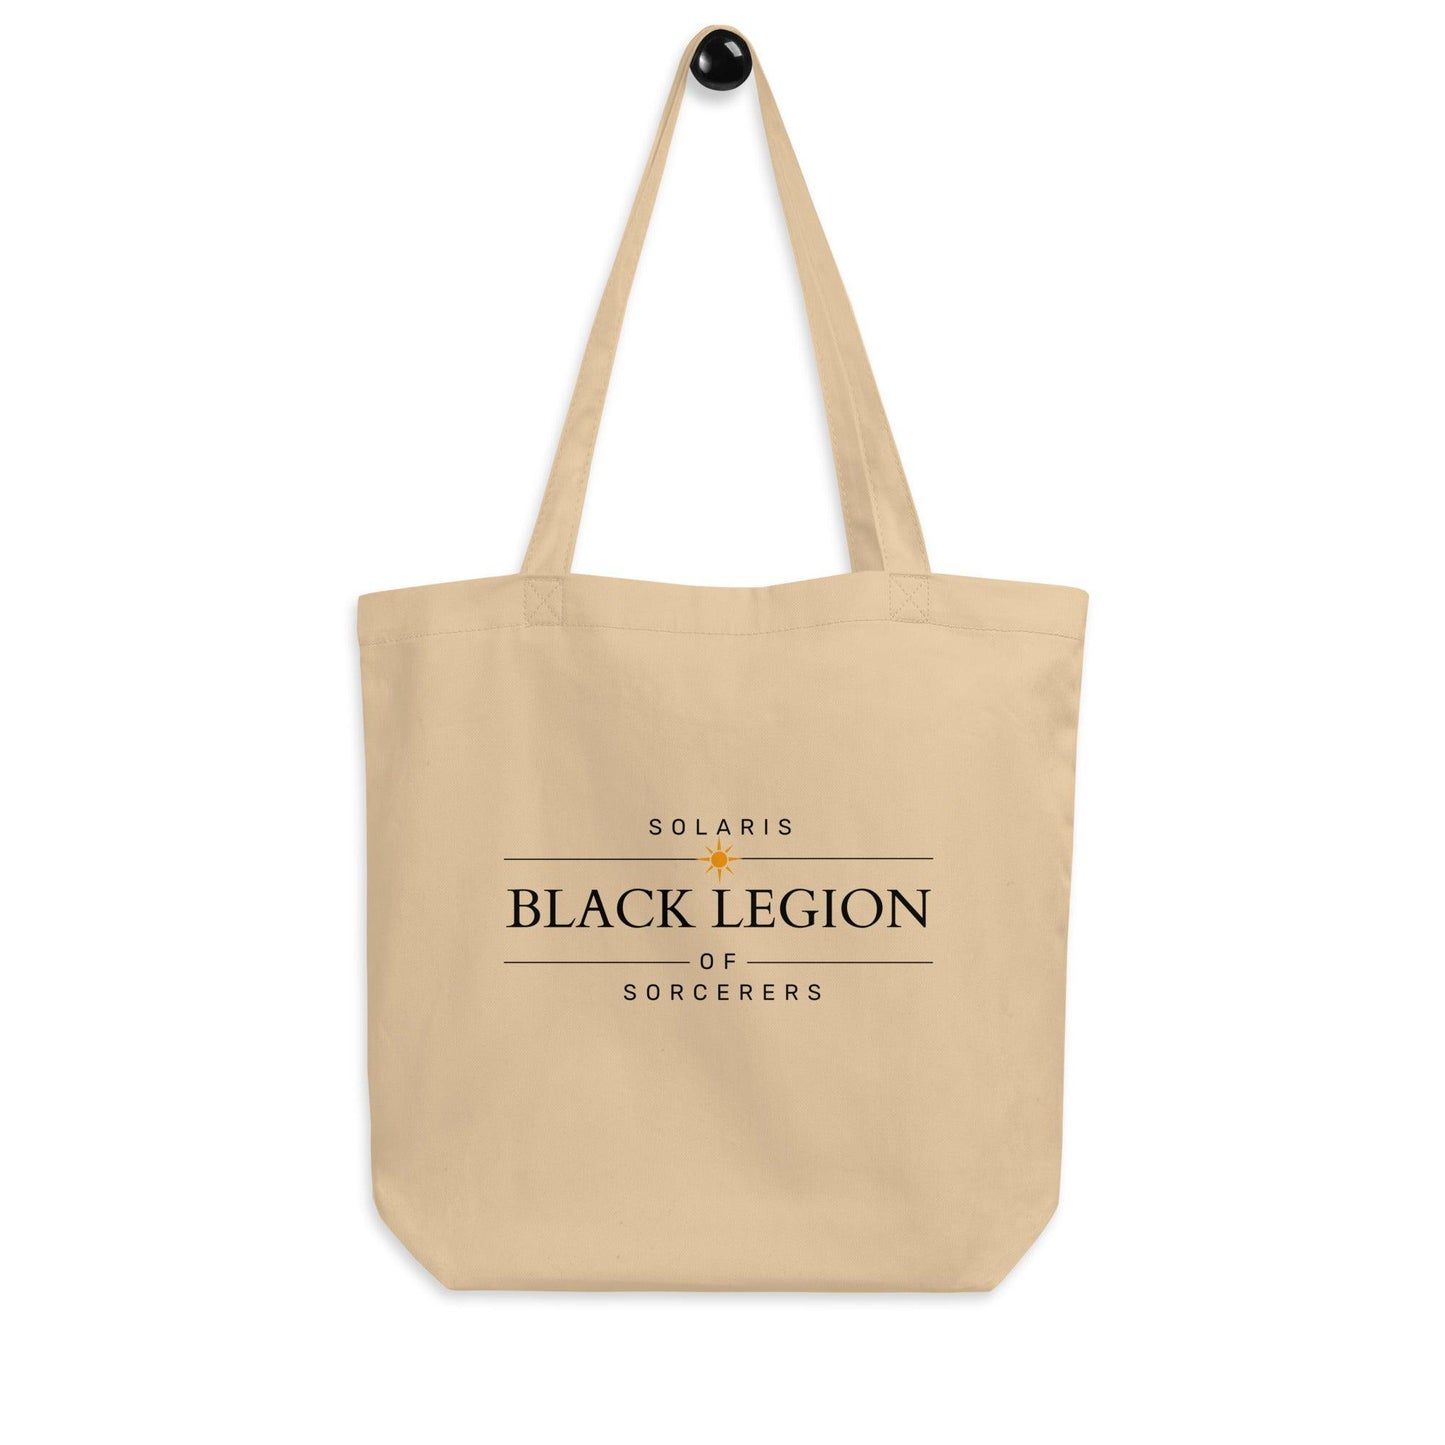 Black Legion Sorcerer Tote Bag - The Bean Workshop - air awakens, bag, elise kova, tote